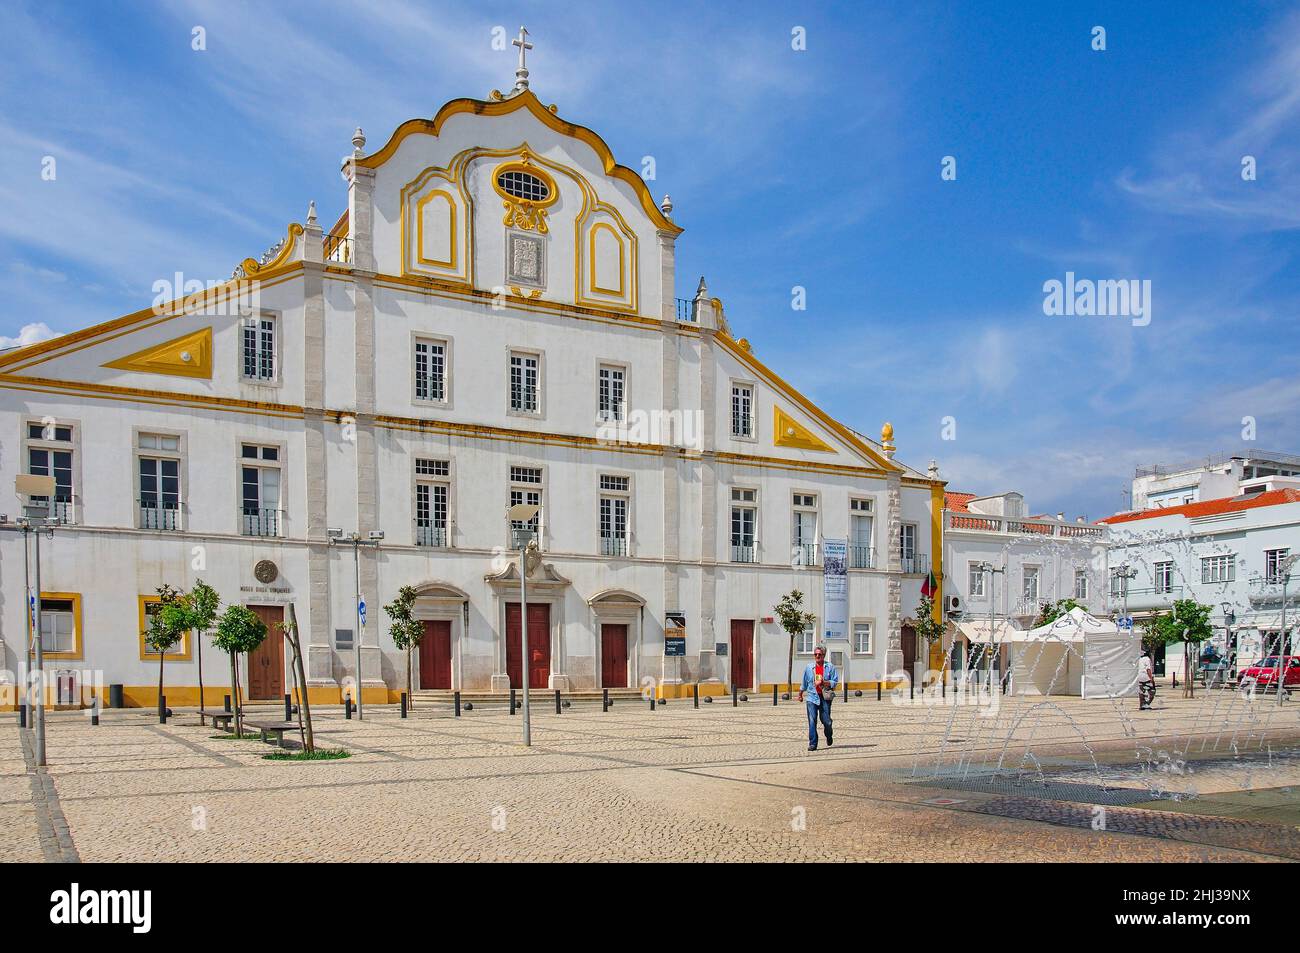 The Jesuit College Building, Republica Square, Portimão, Algarve Region, Portugal Stock Photo